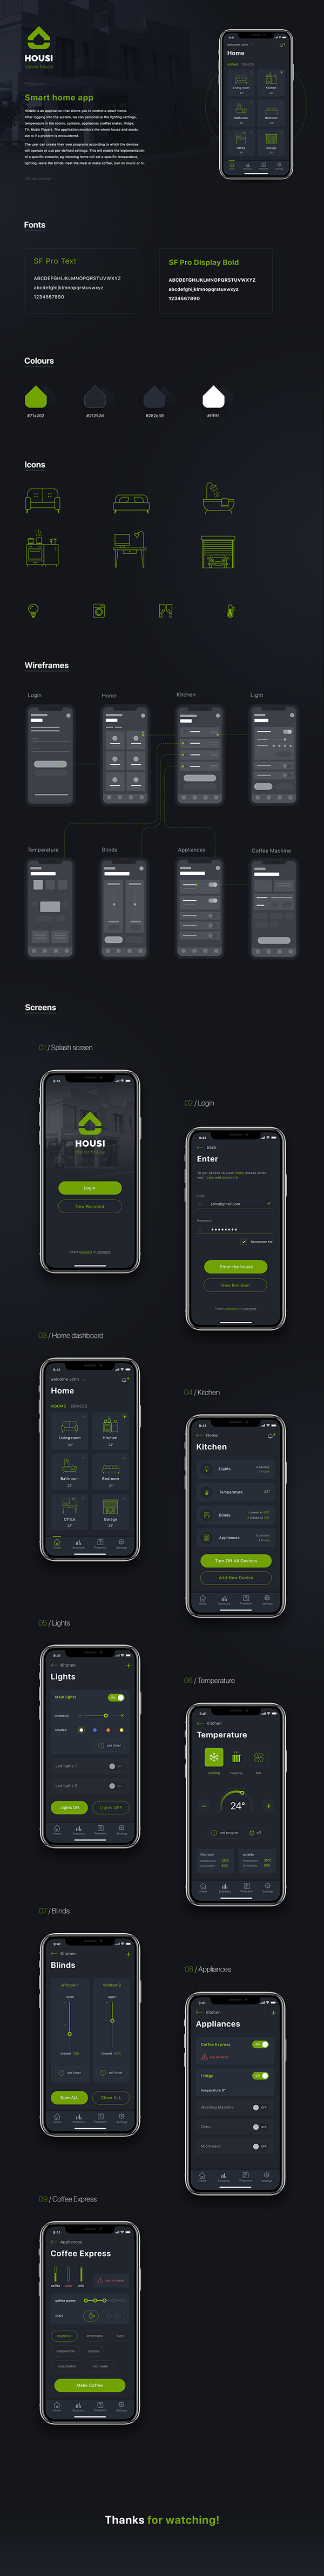 Housi App / smart home concept